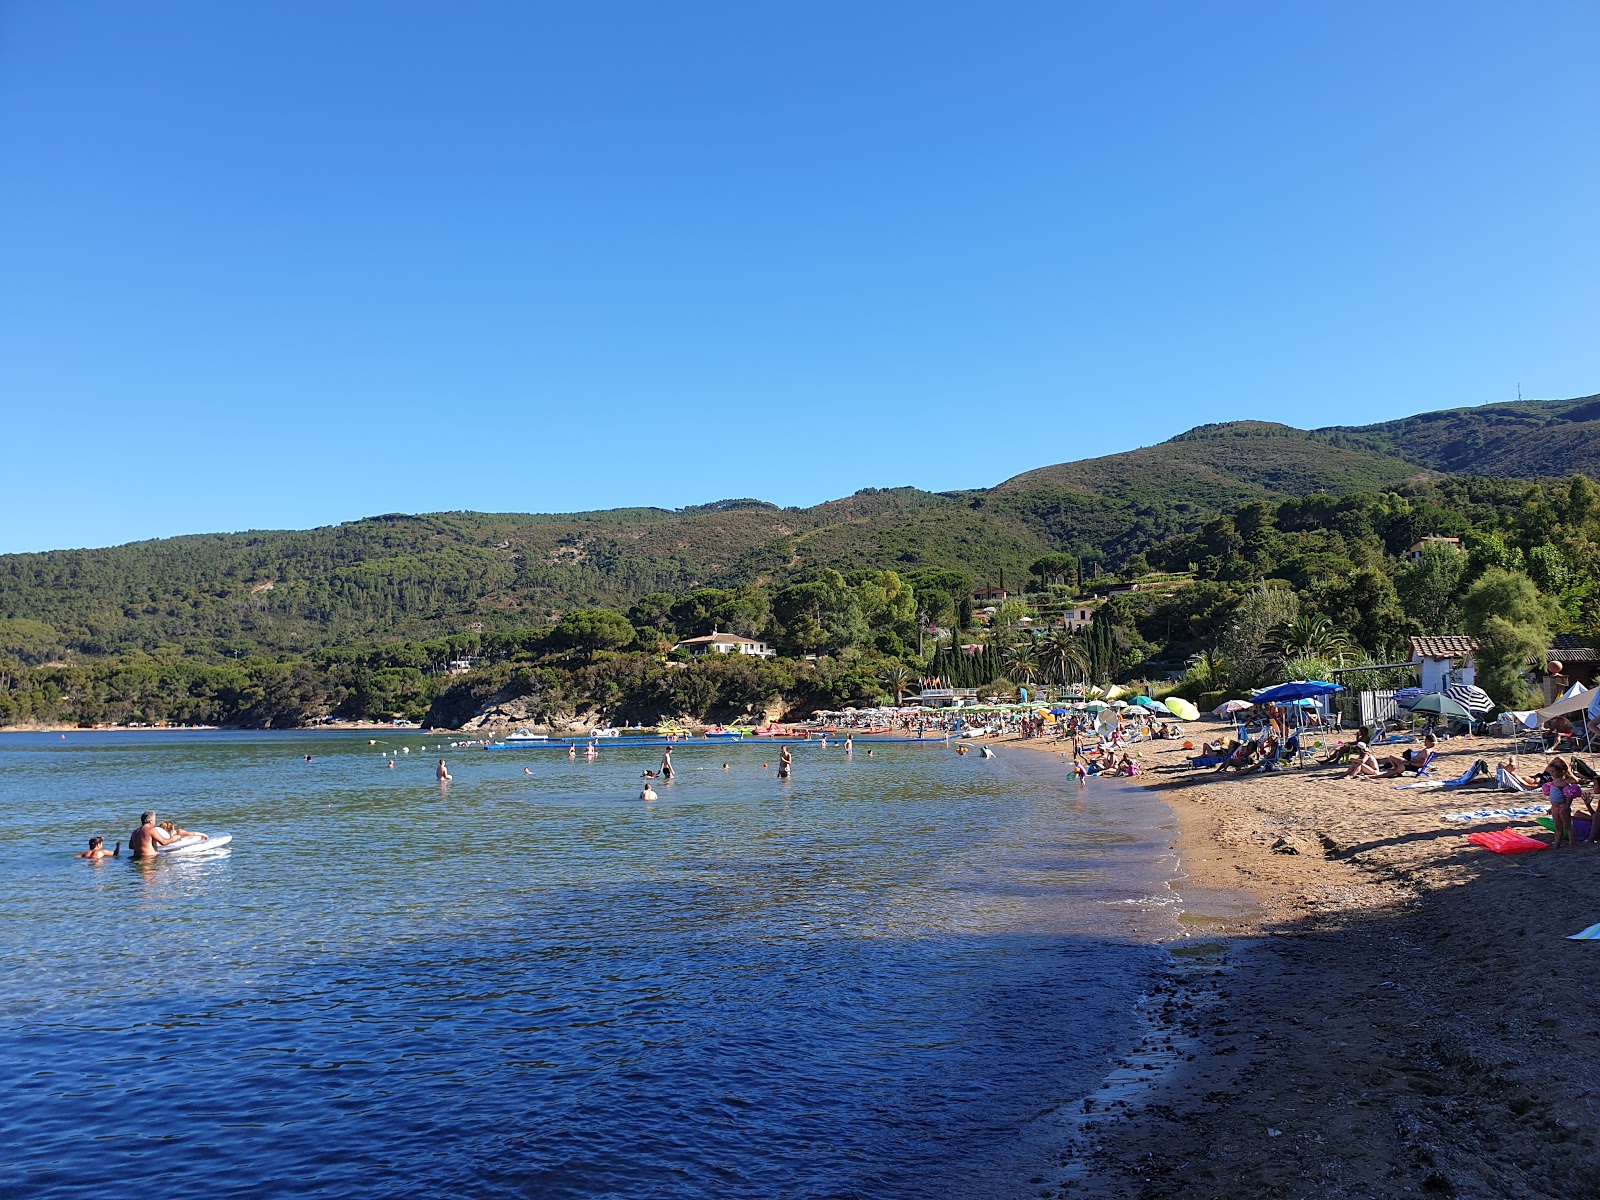 Fotografija Straccoligno beach z prostoren zaliv